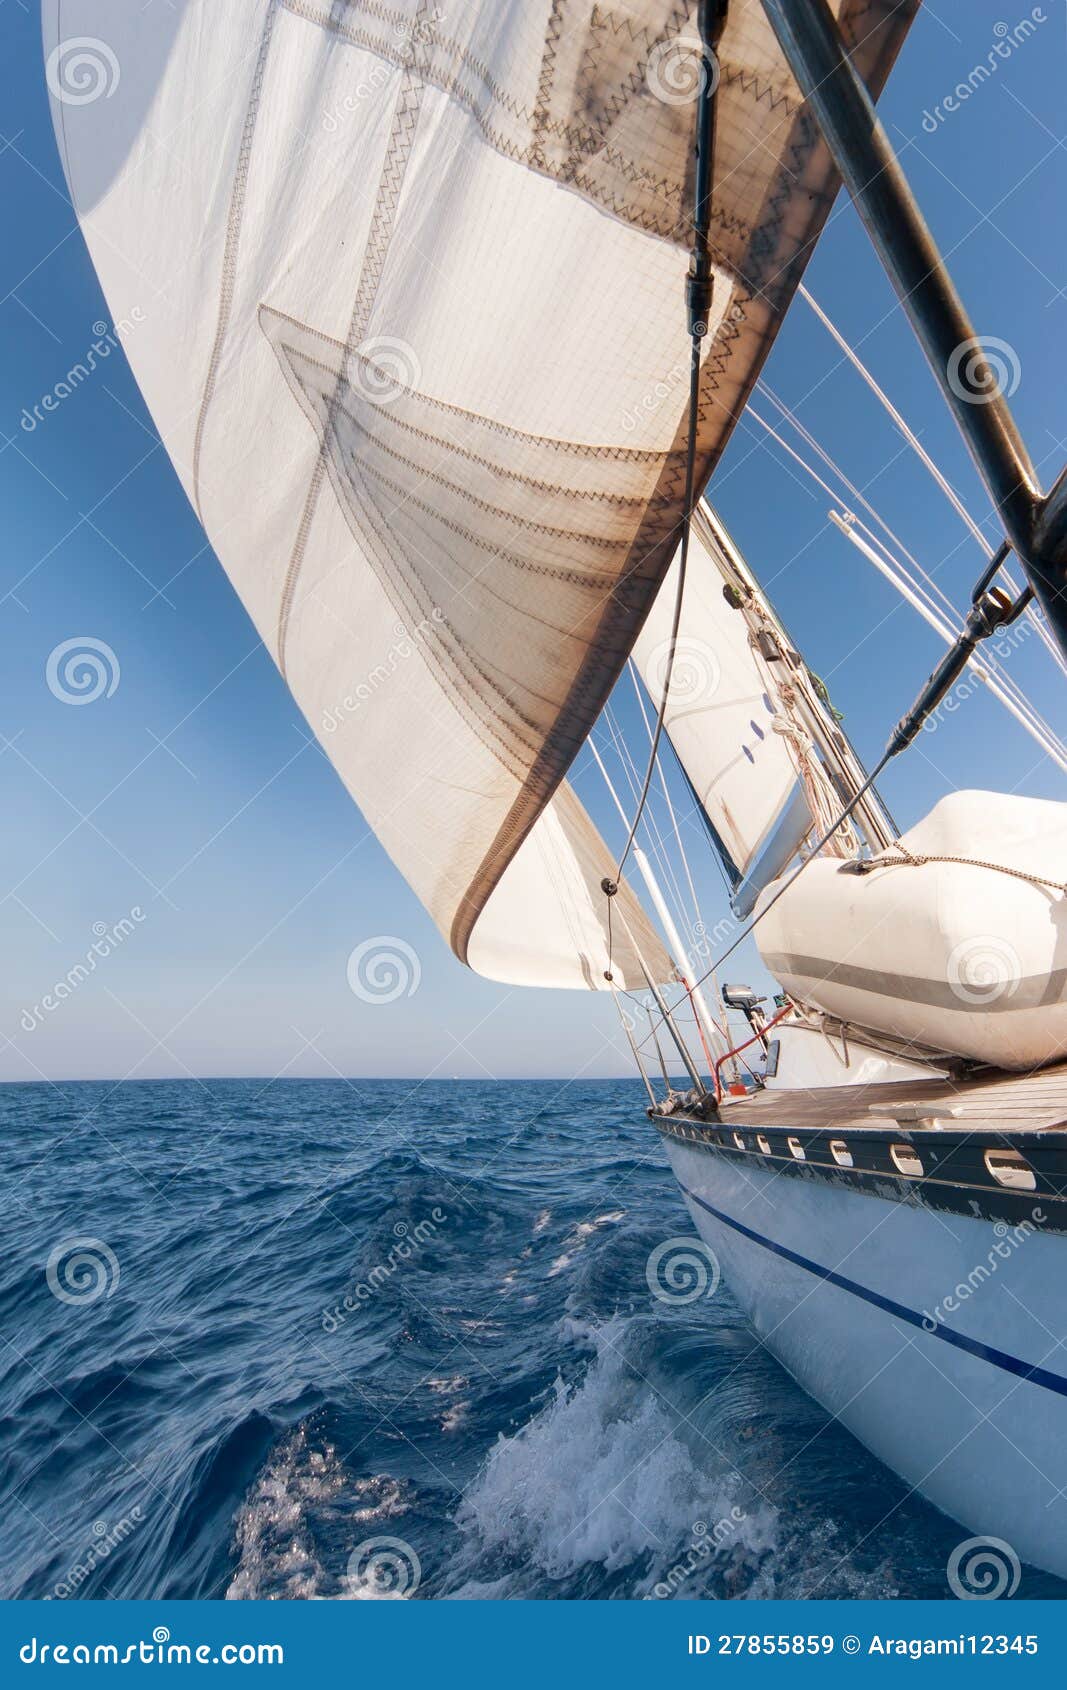 sailing yacht on the race